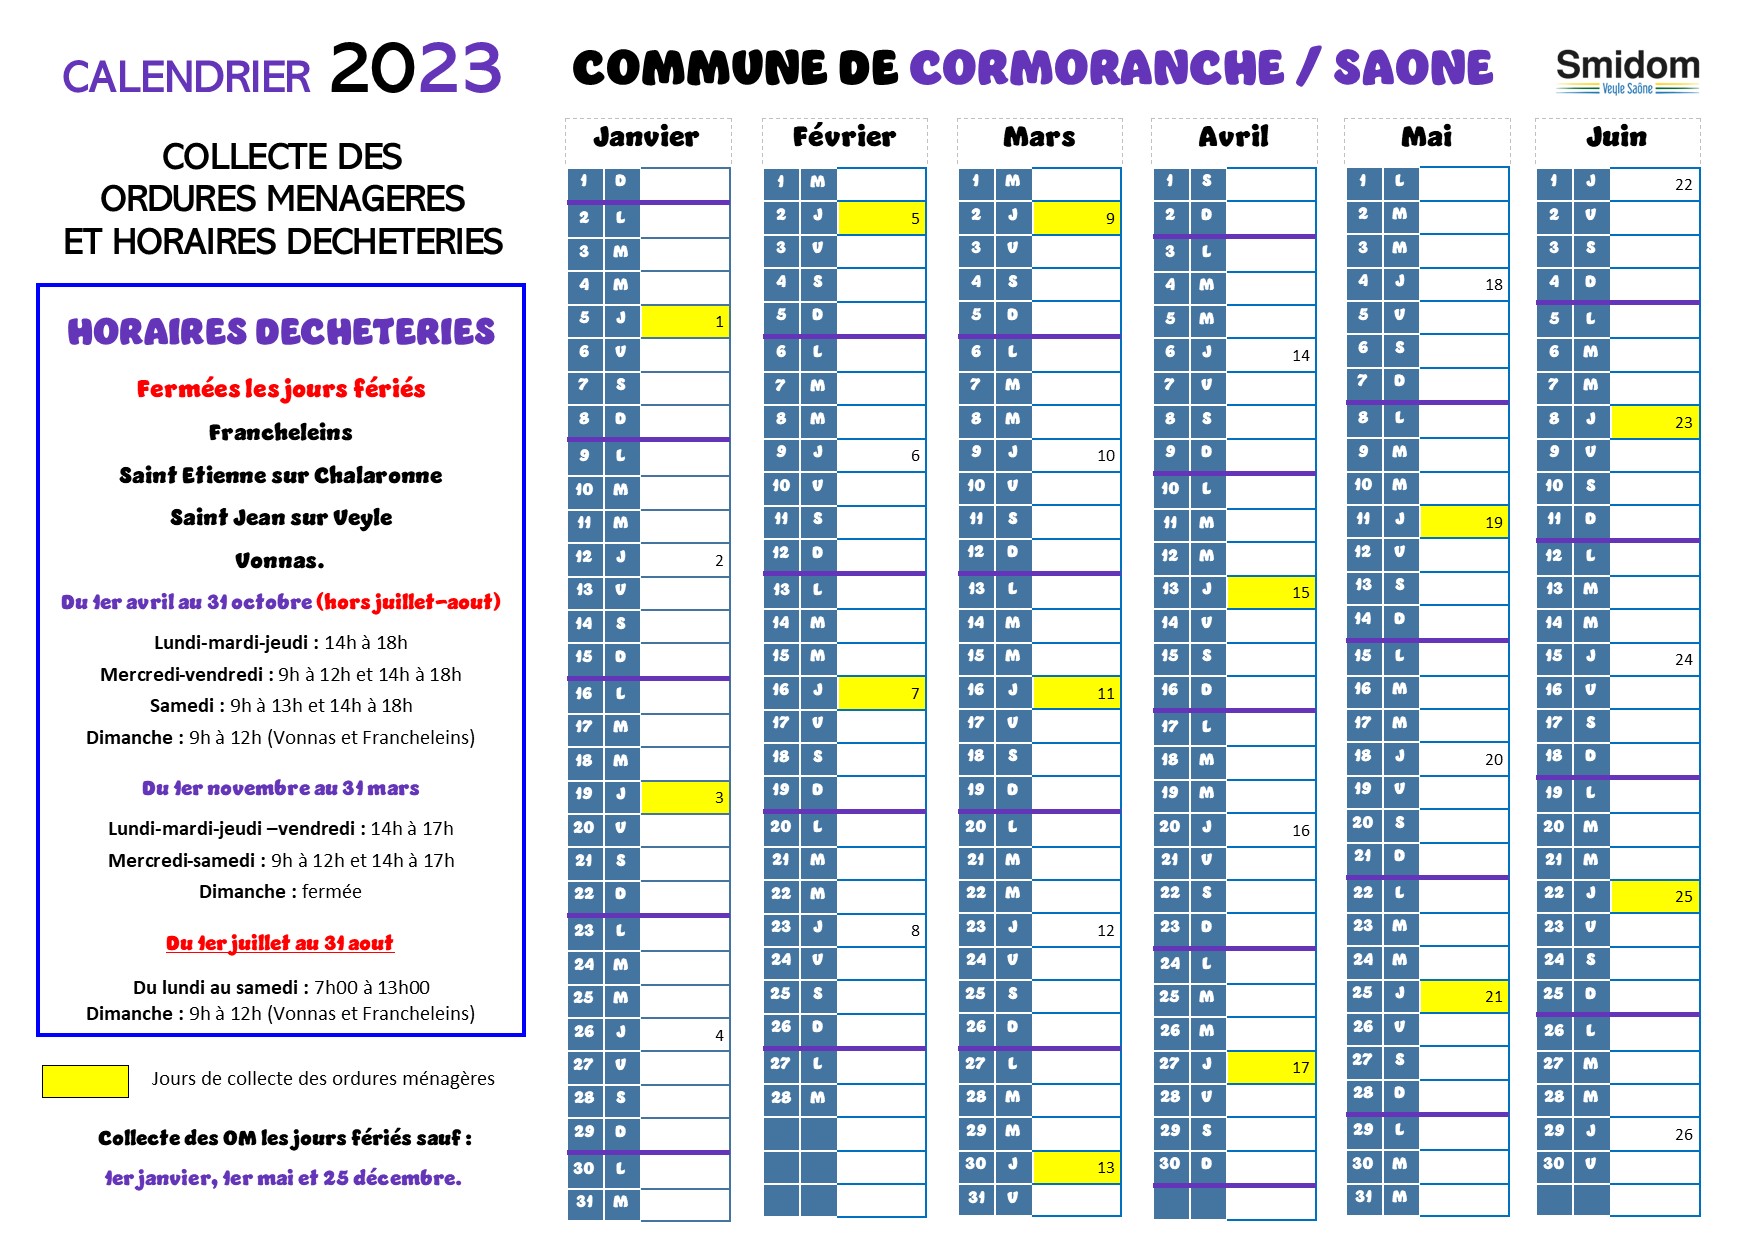 Cormoranche sur Saone Calendrier 2023.jpg